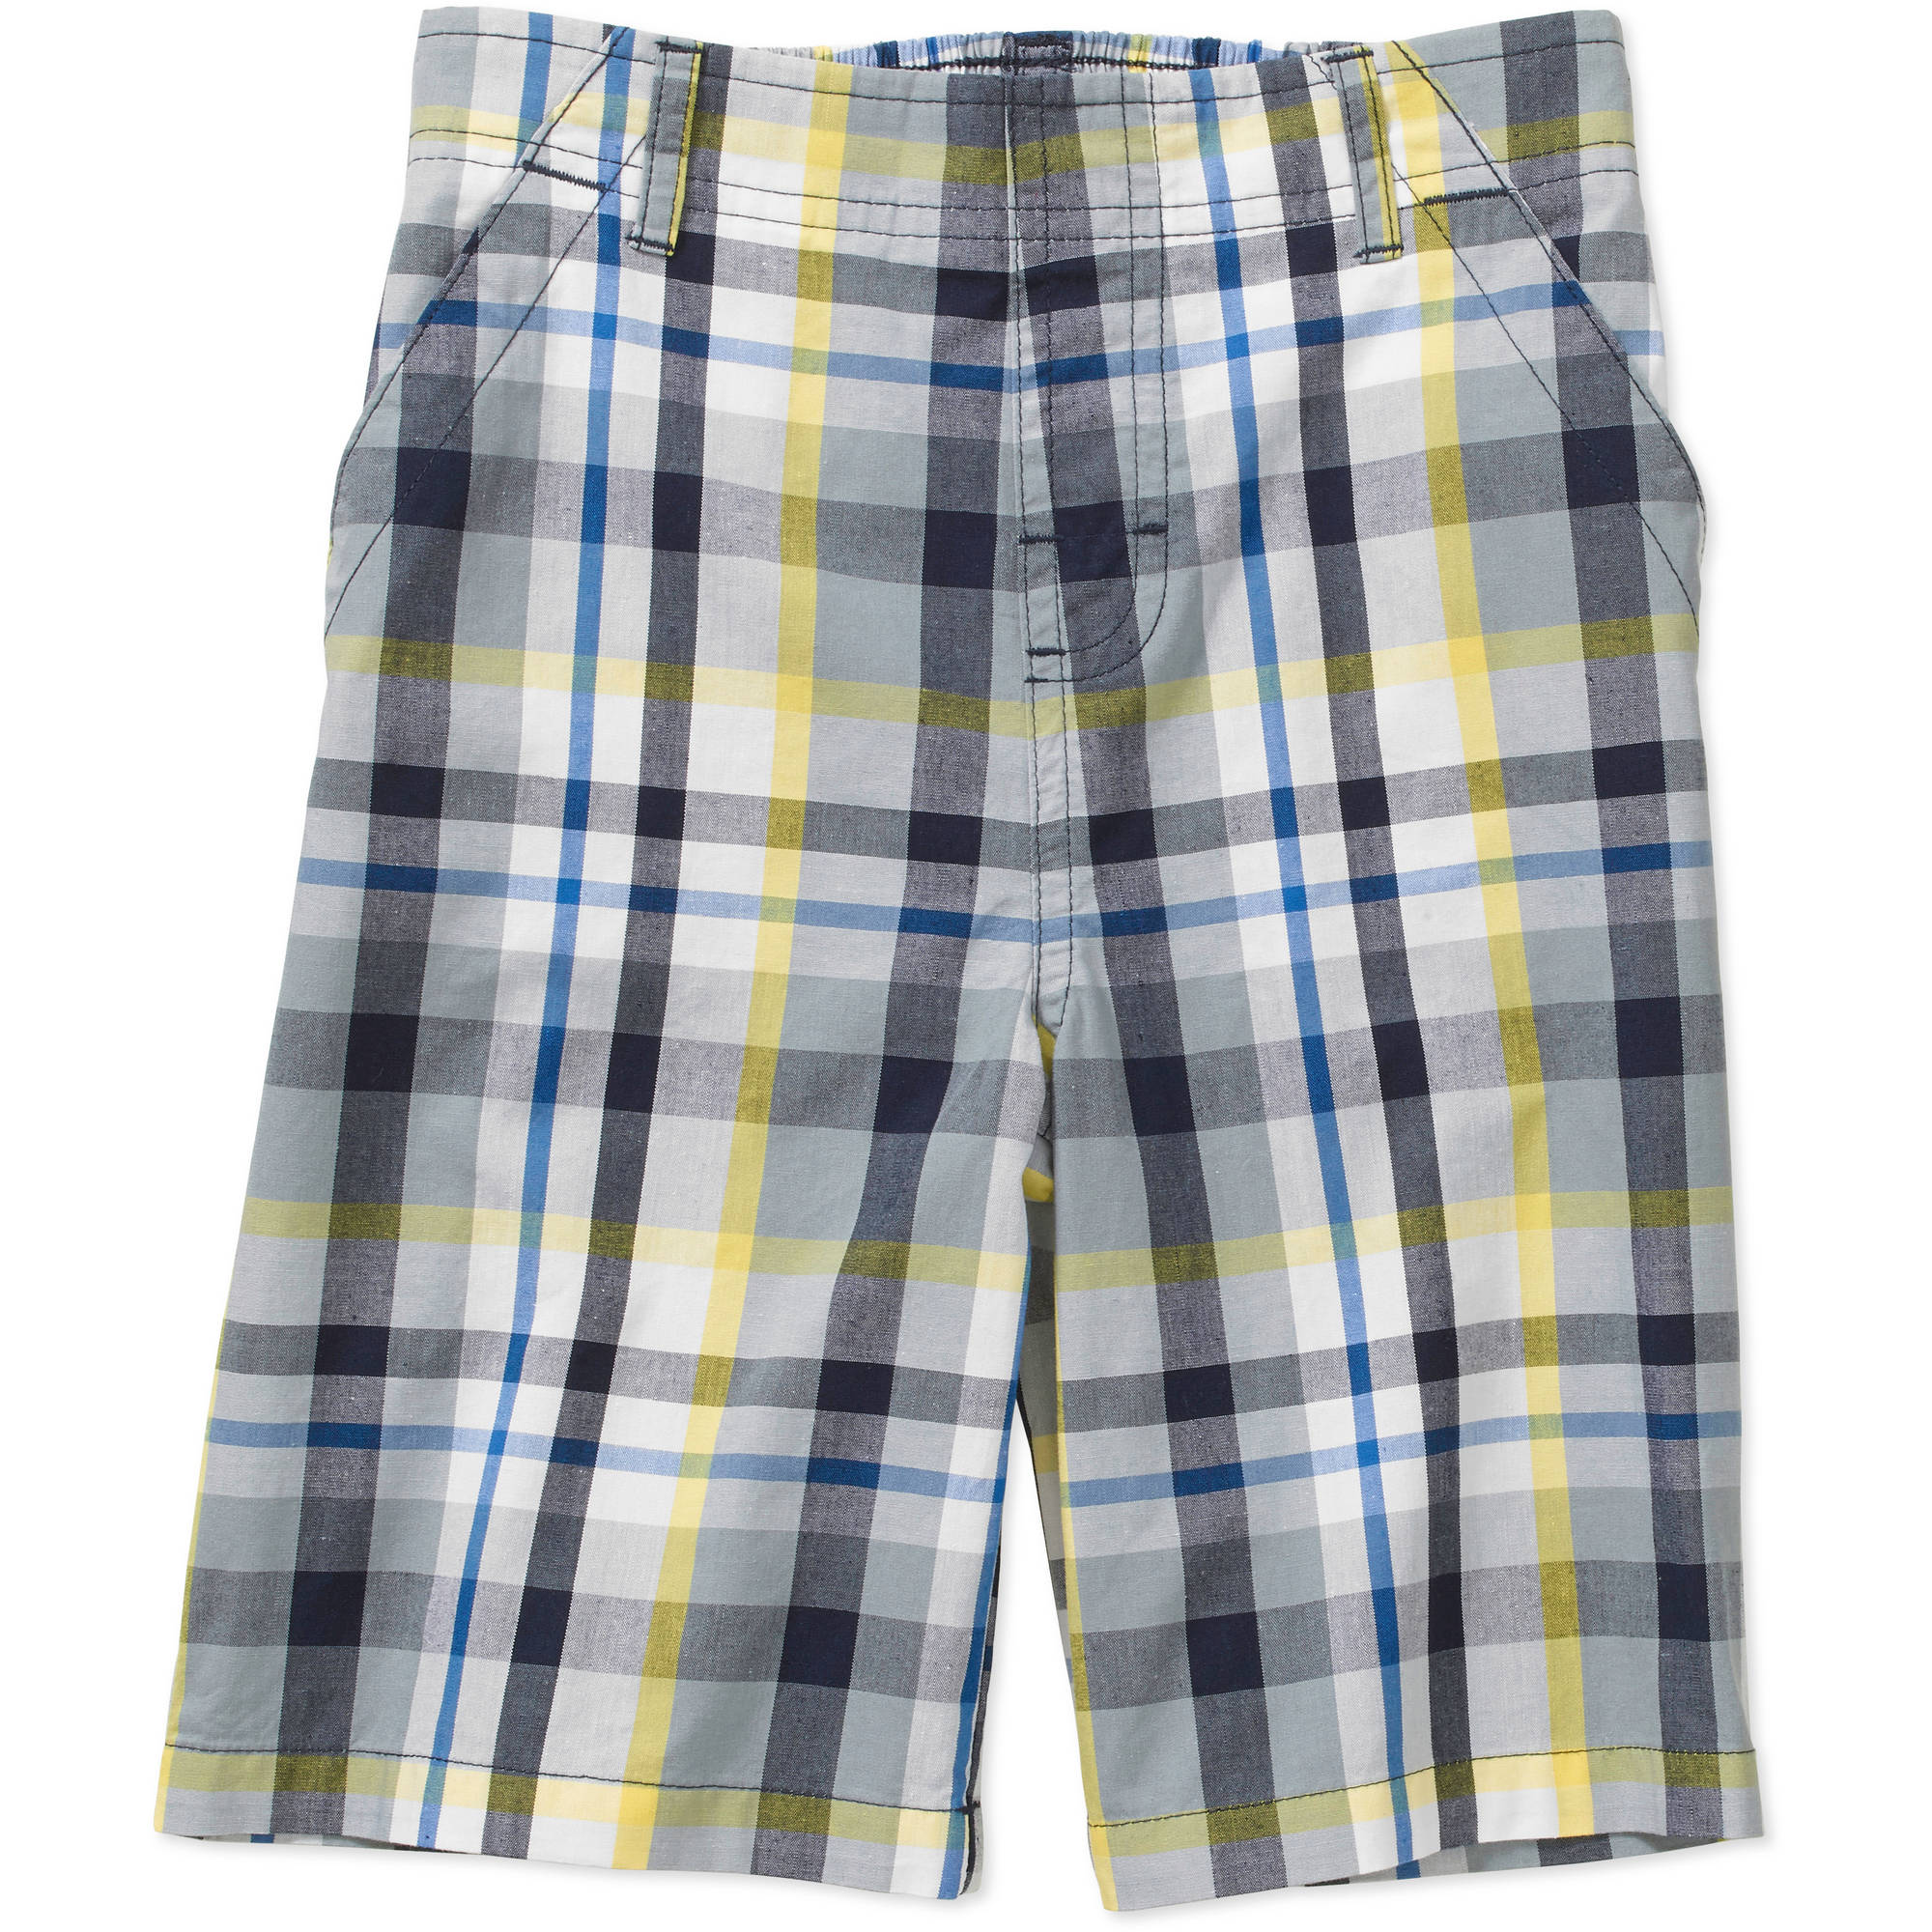 365 kids from garanimals boysu0027 woven plaid shorts with pockets - walmart.com LPGYLUU